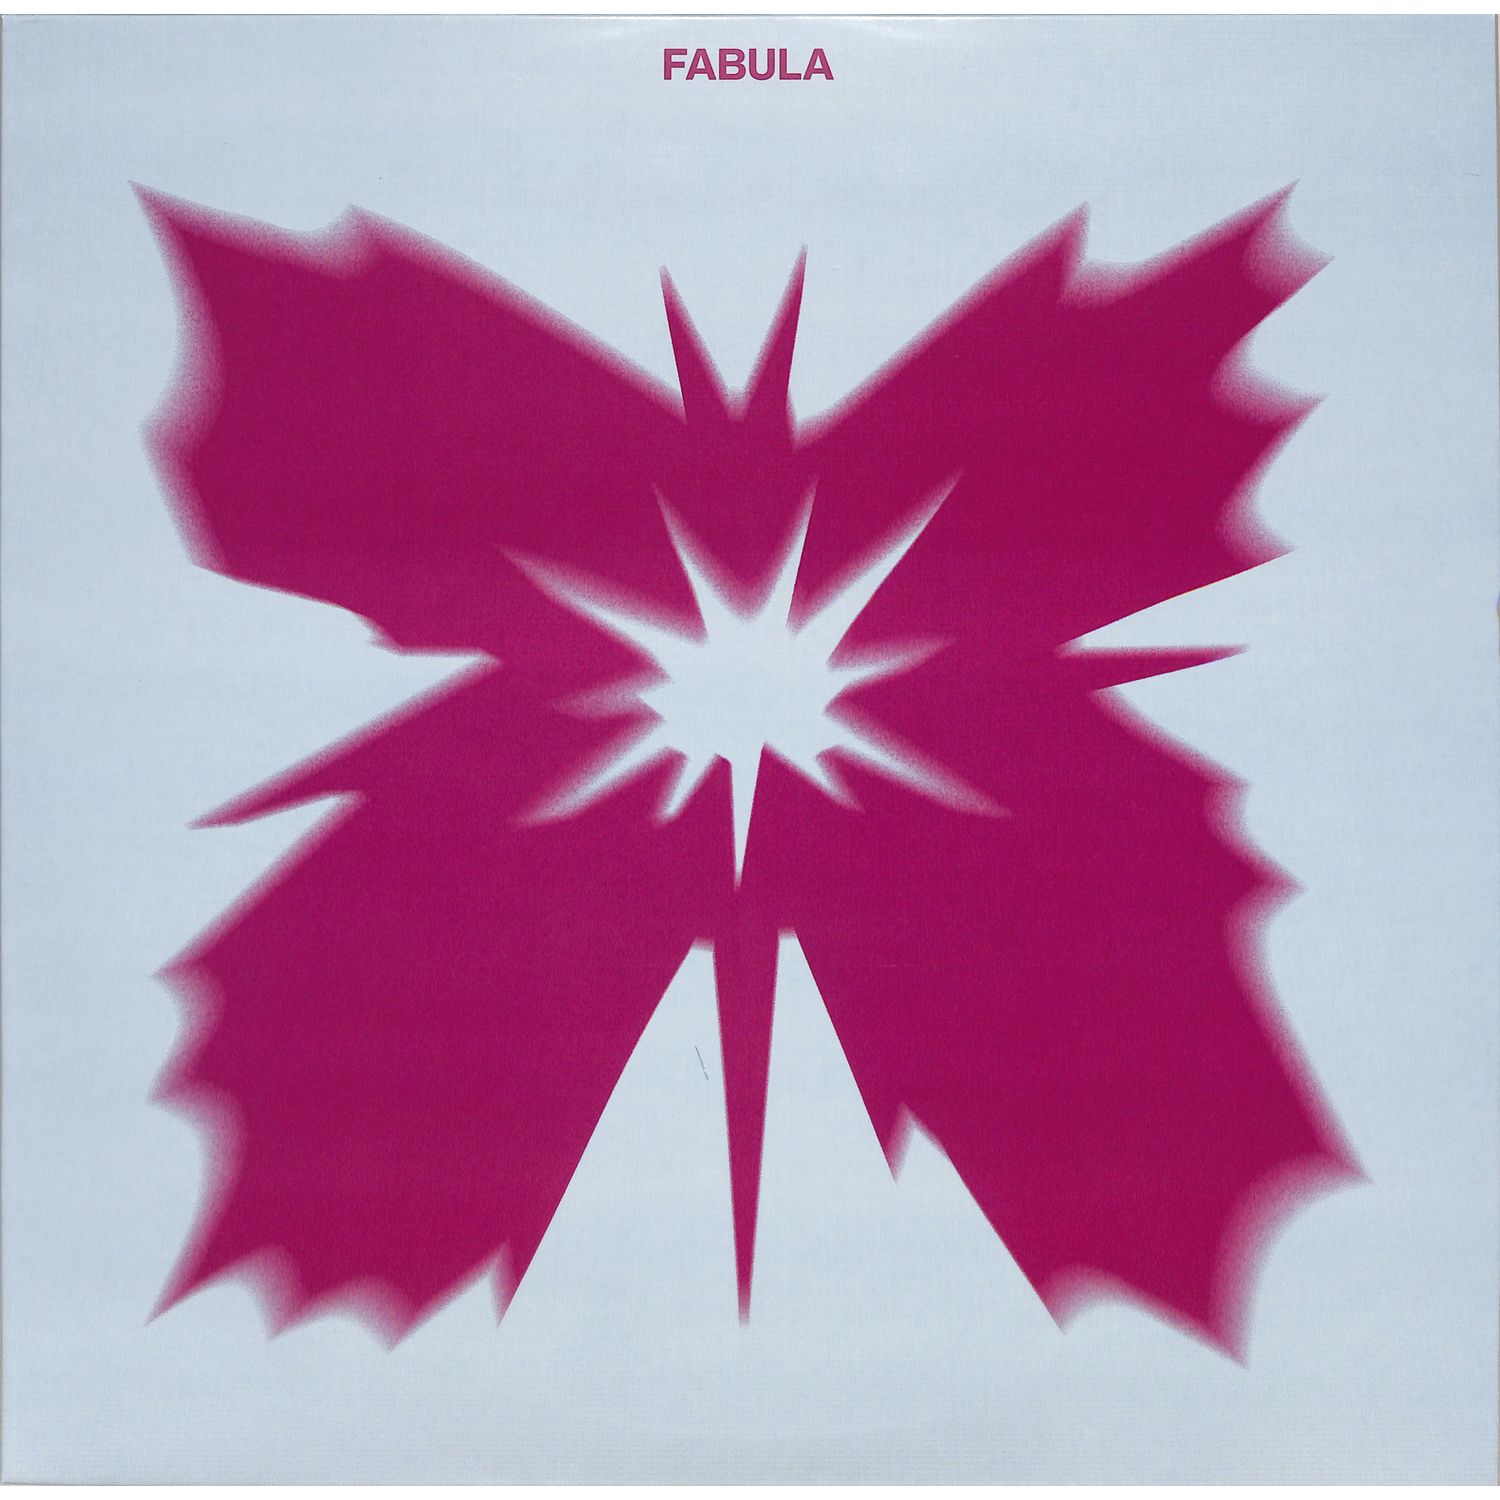 Fabula - FABULA EP